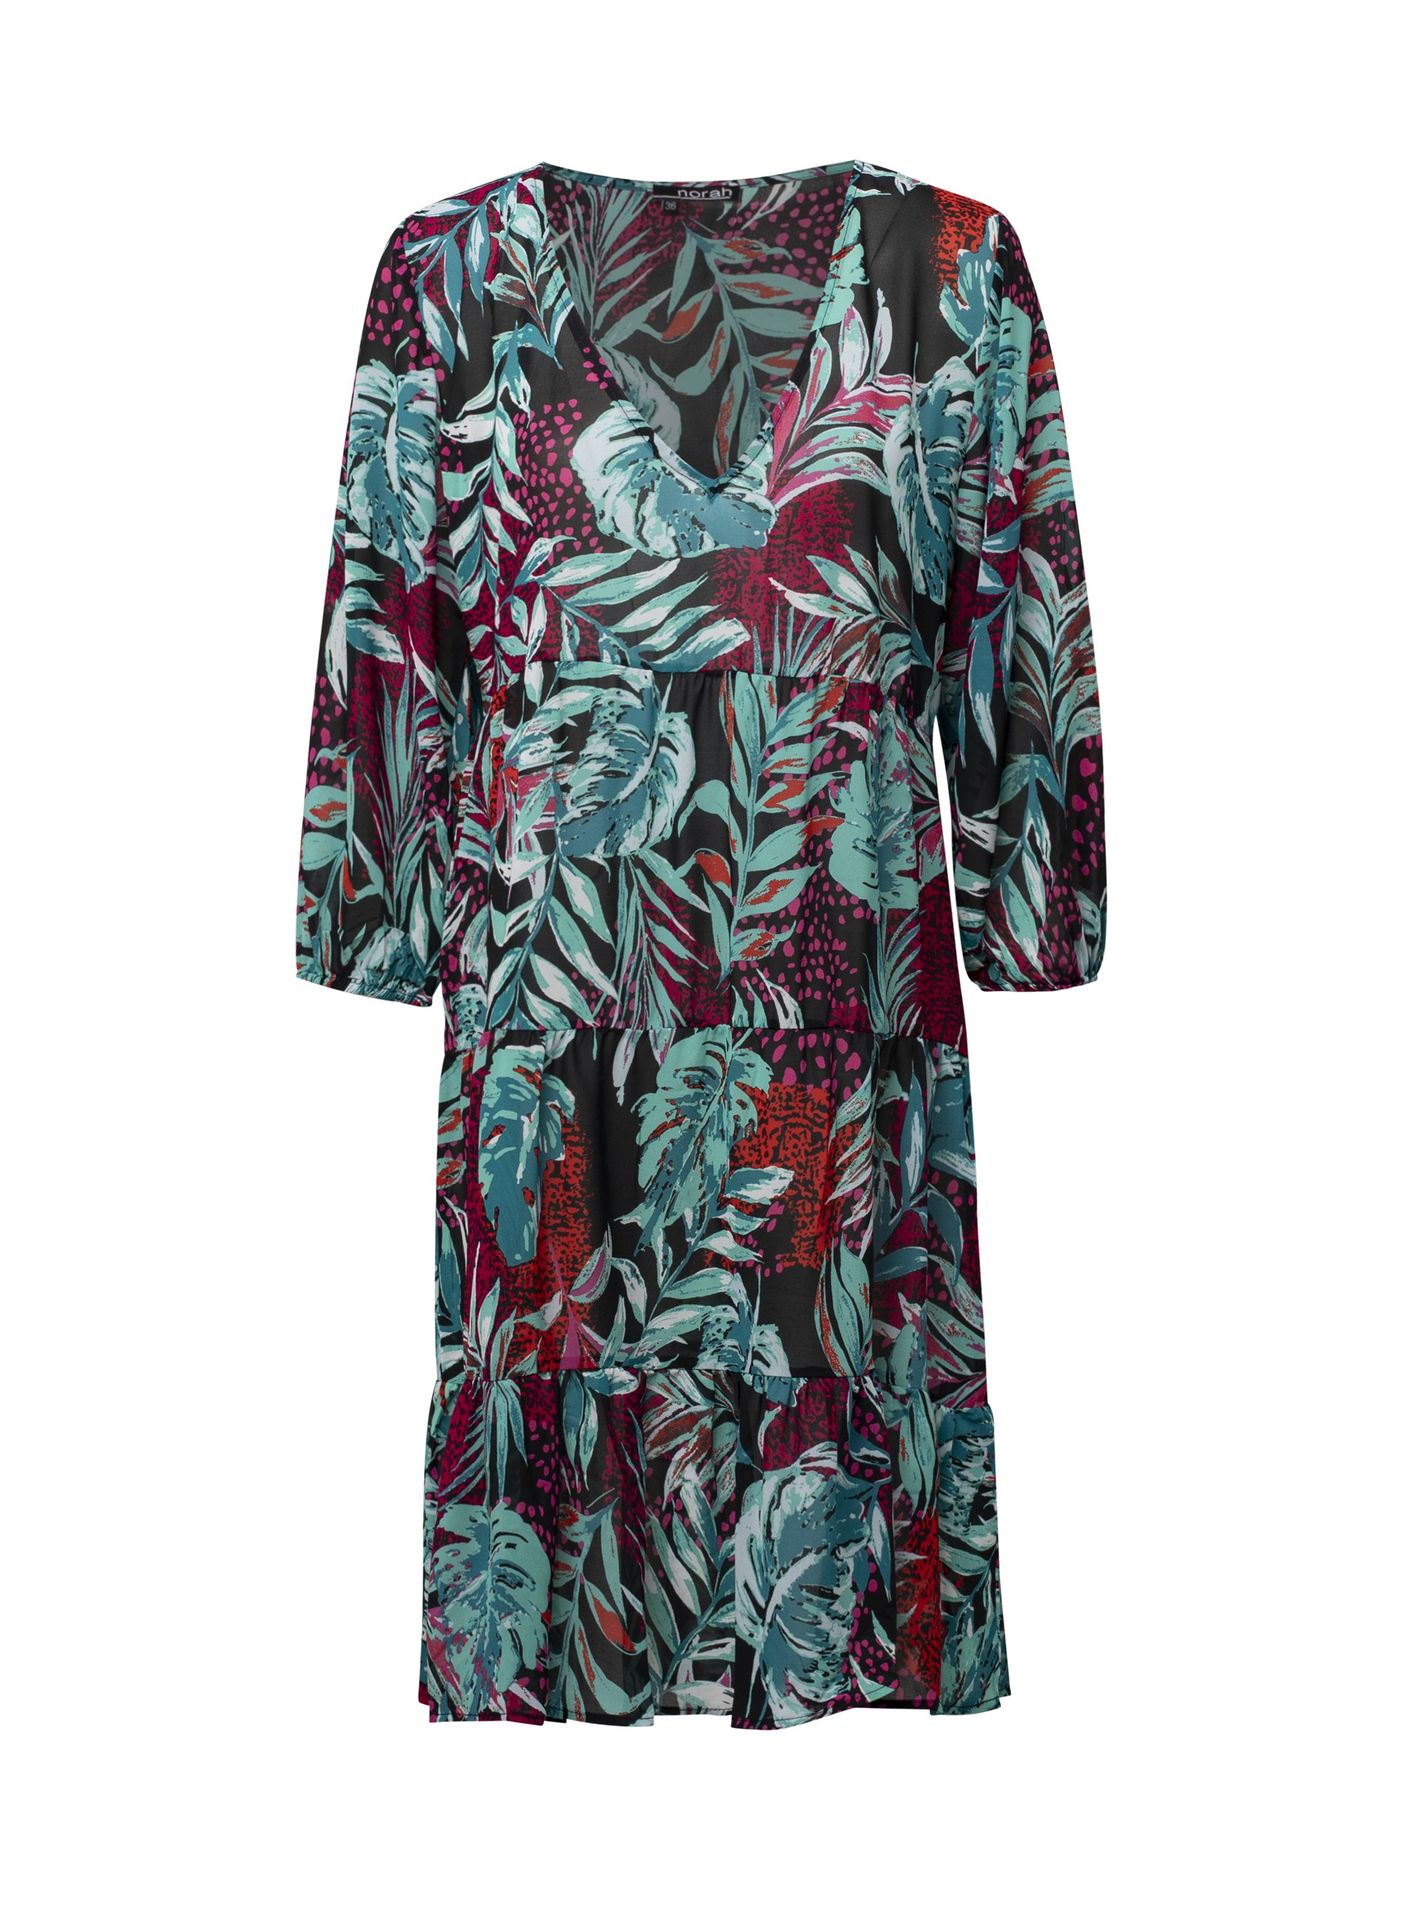 Norah Mini jurk meerkleurig fuchsia multicolor 213005-957